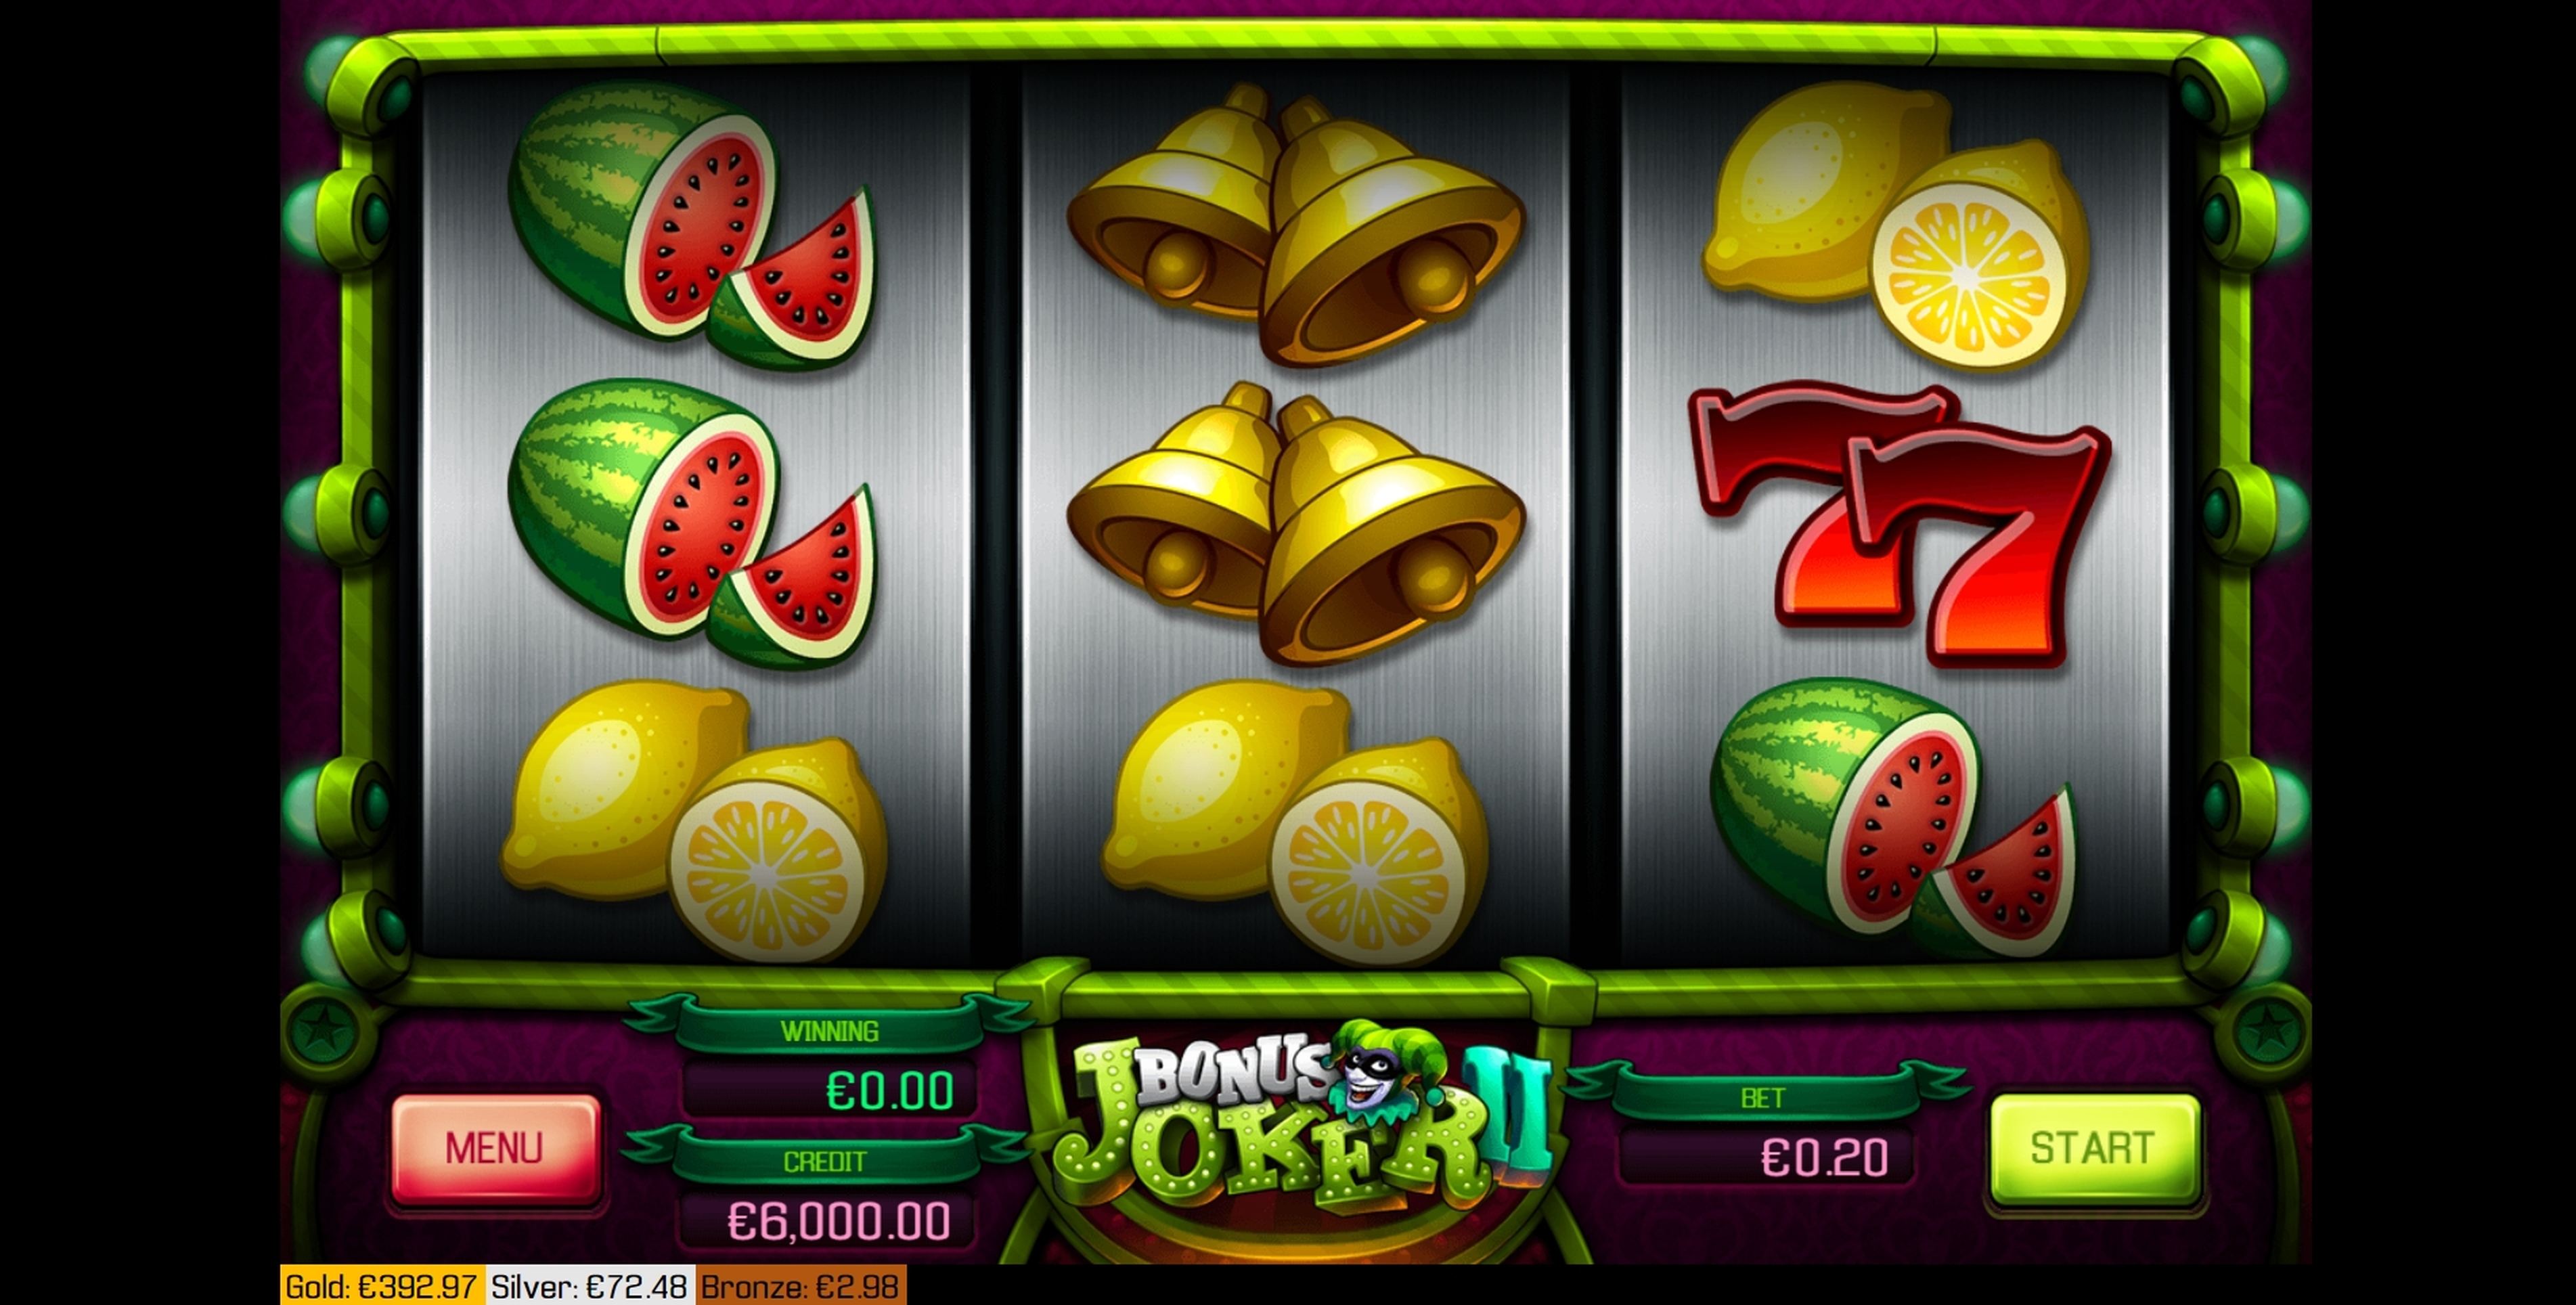 Bonus Joker 2 demo play, Slot Machine Online by Apollo